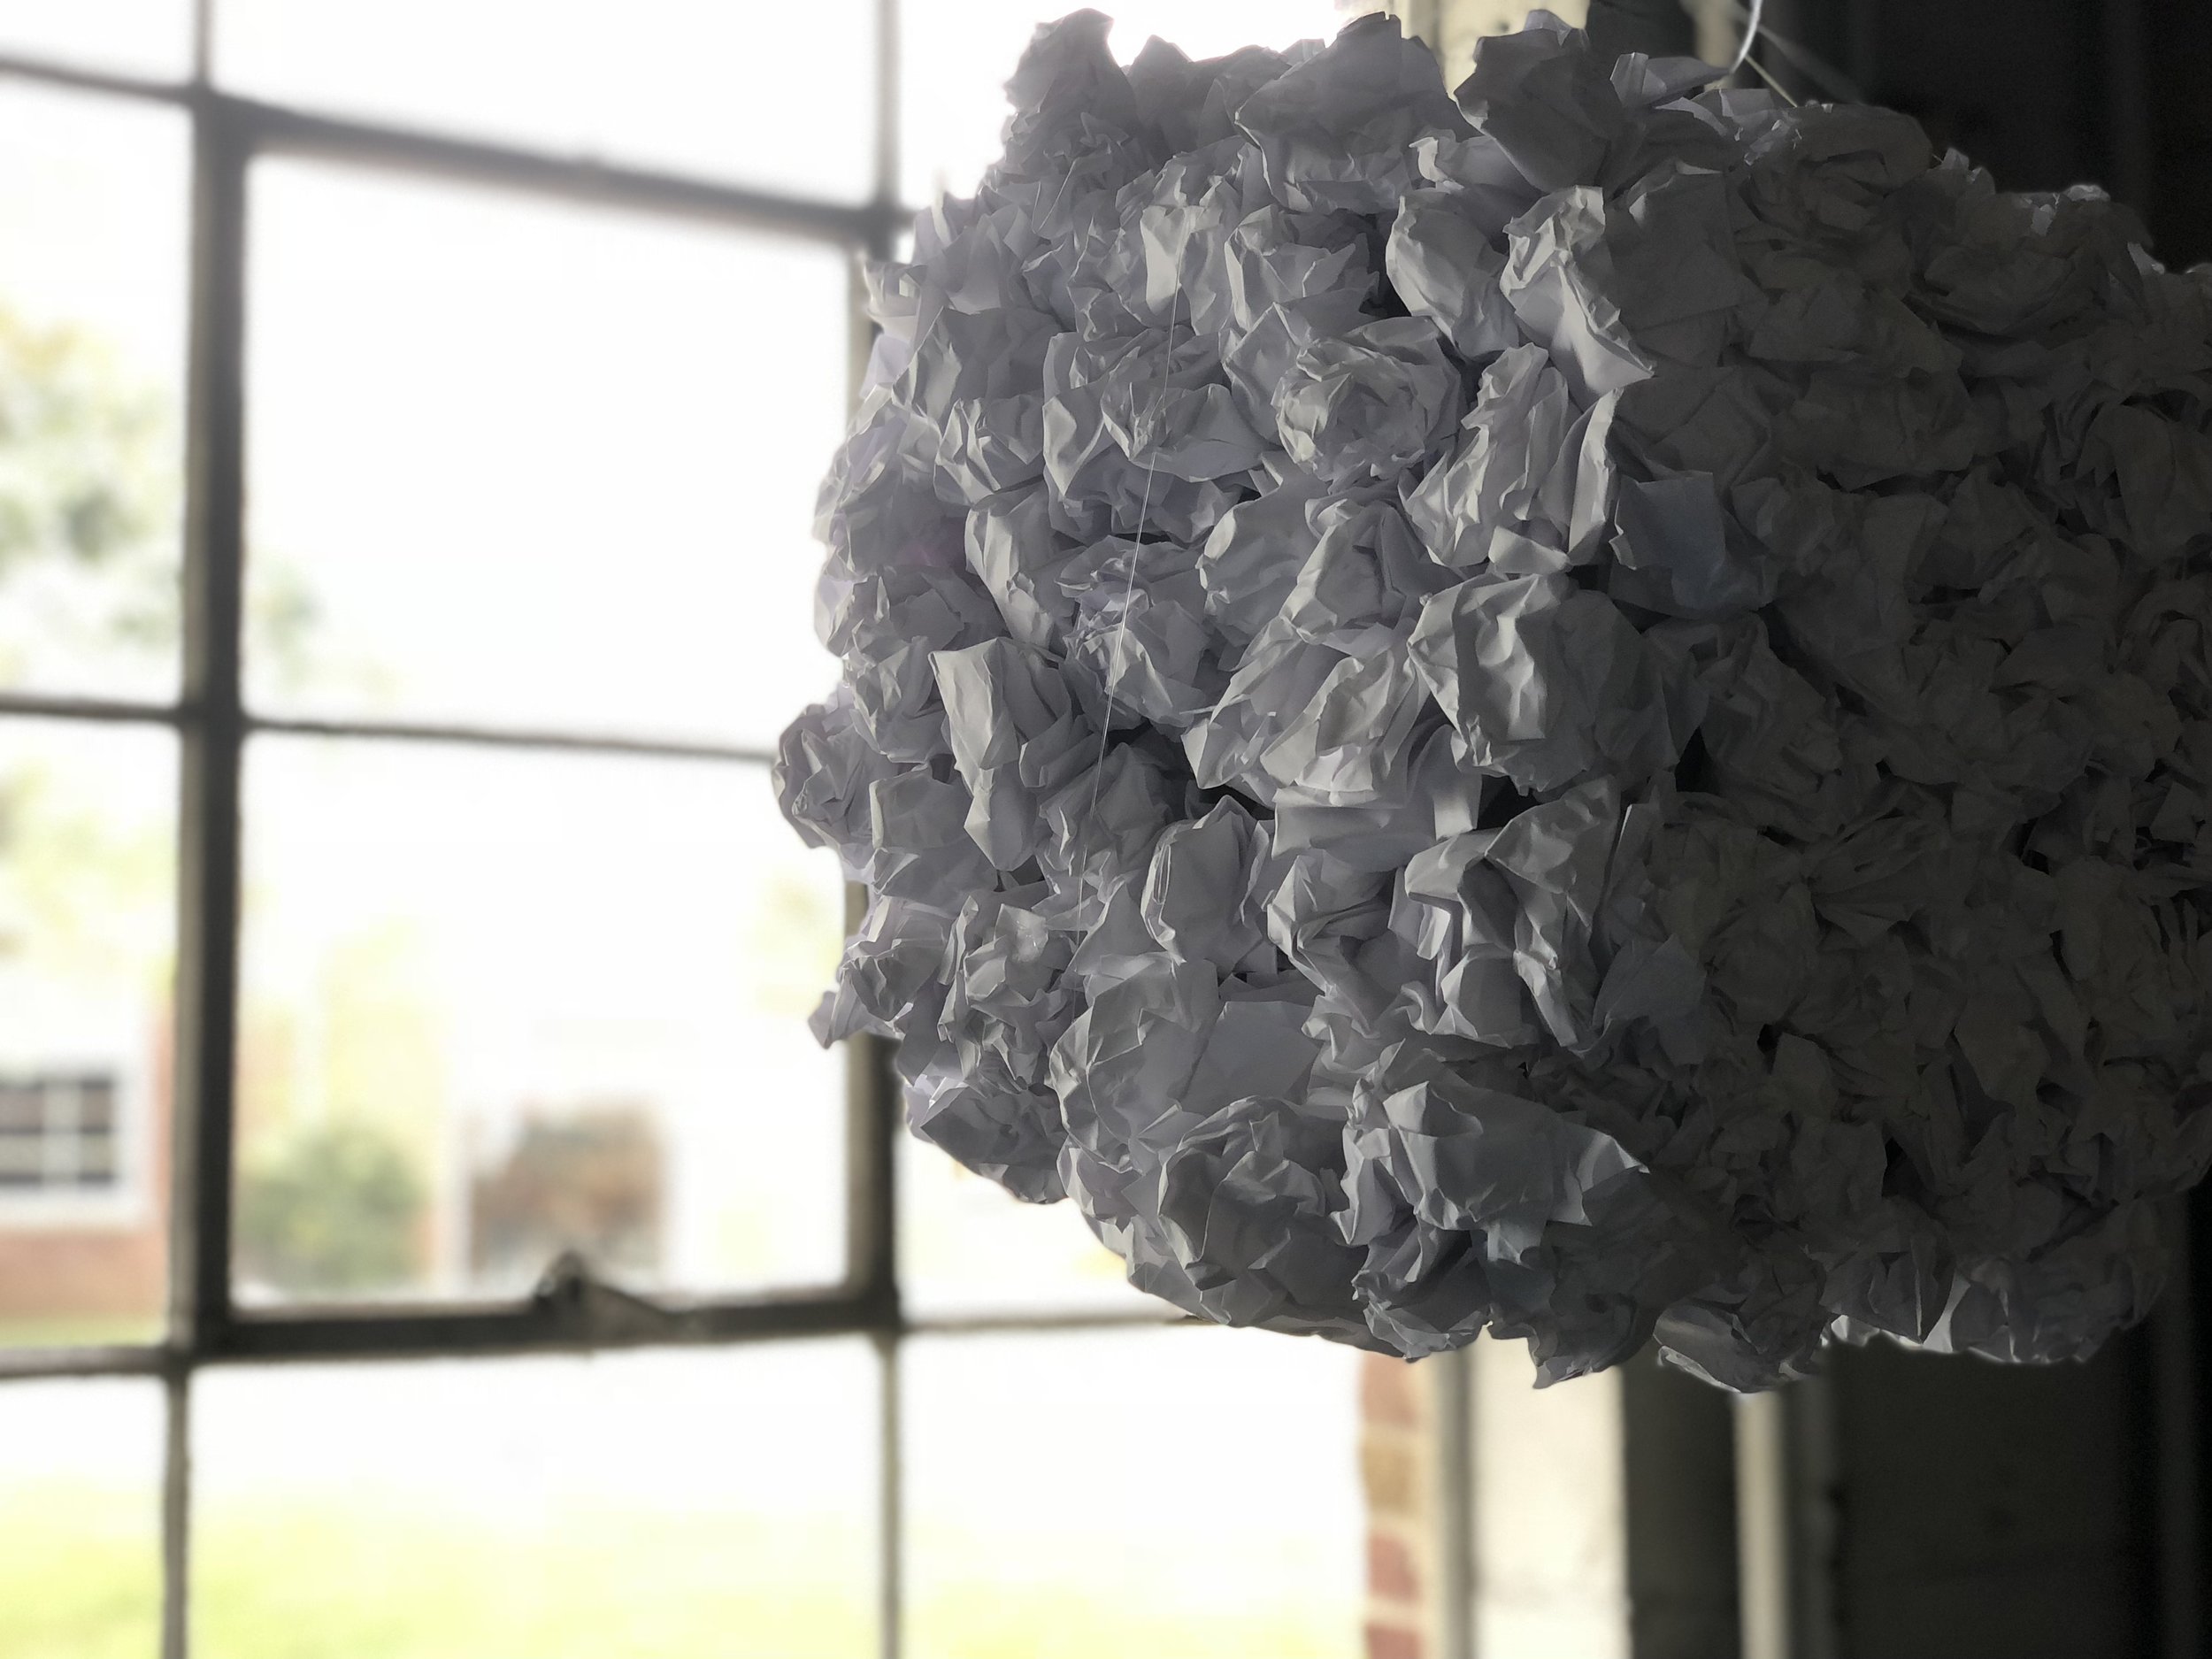  Student: Conner Murt Class: Sculpture I Project: “Form from Flat” Paper, monofilament. 2018 